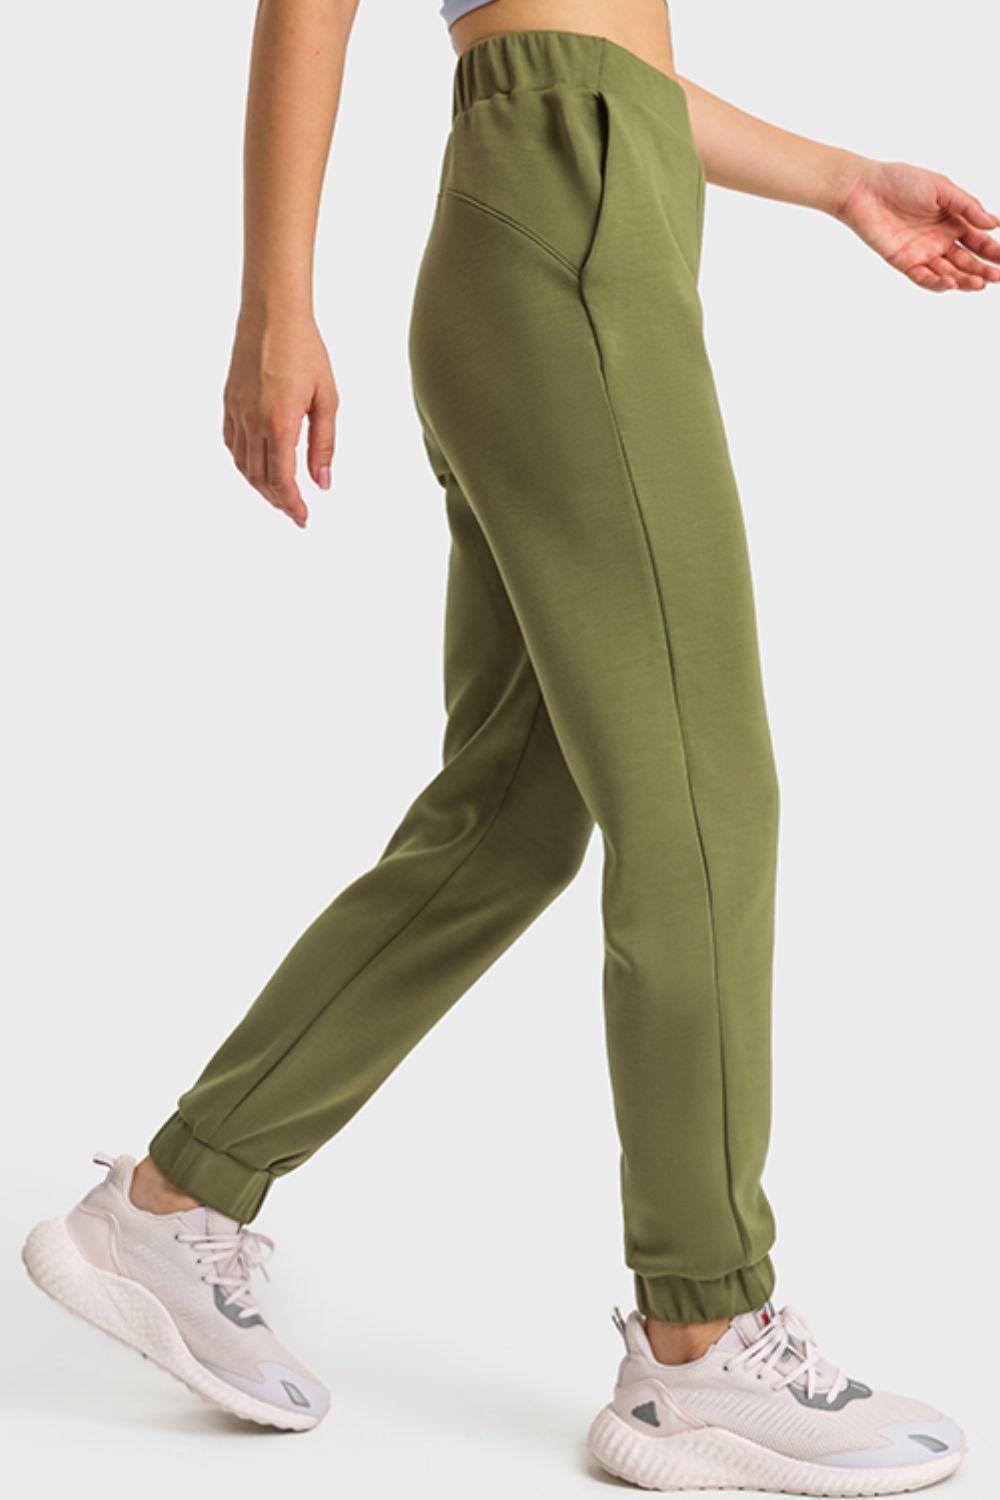 Women's Easy-Wear Joggers With Side Pockets - MXSTUDIO.COM